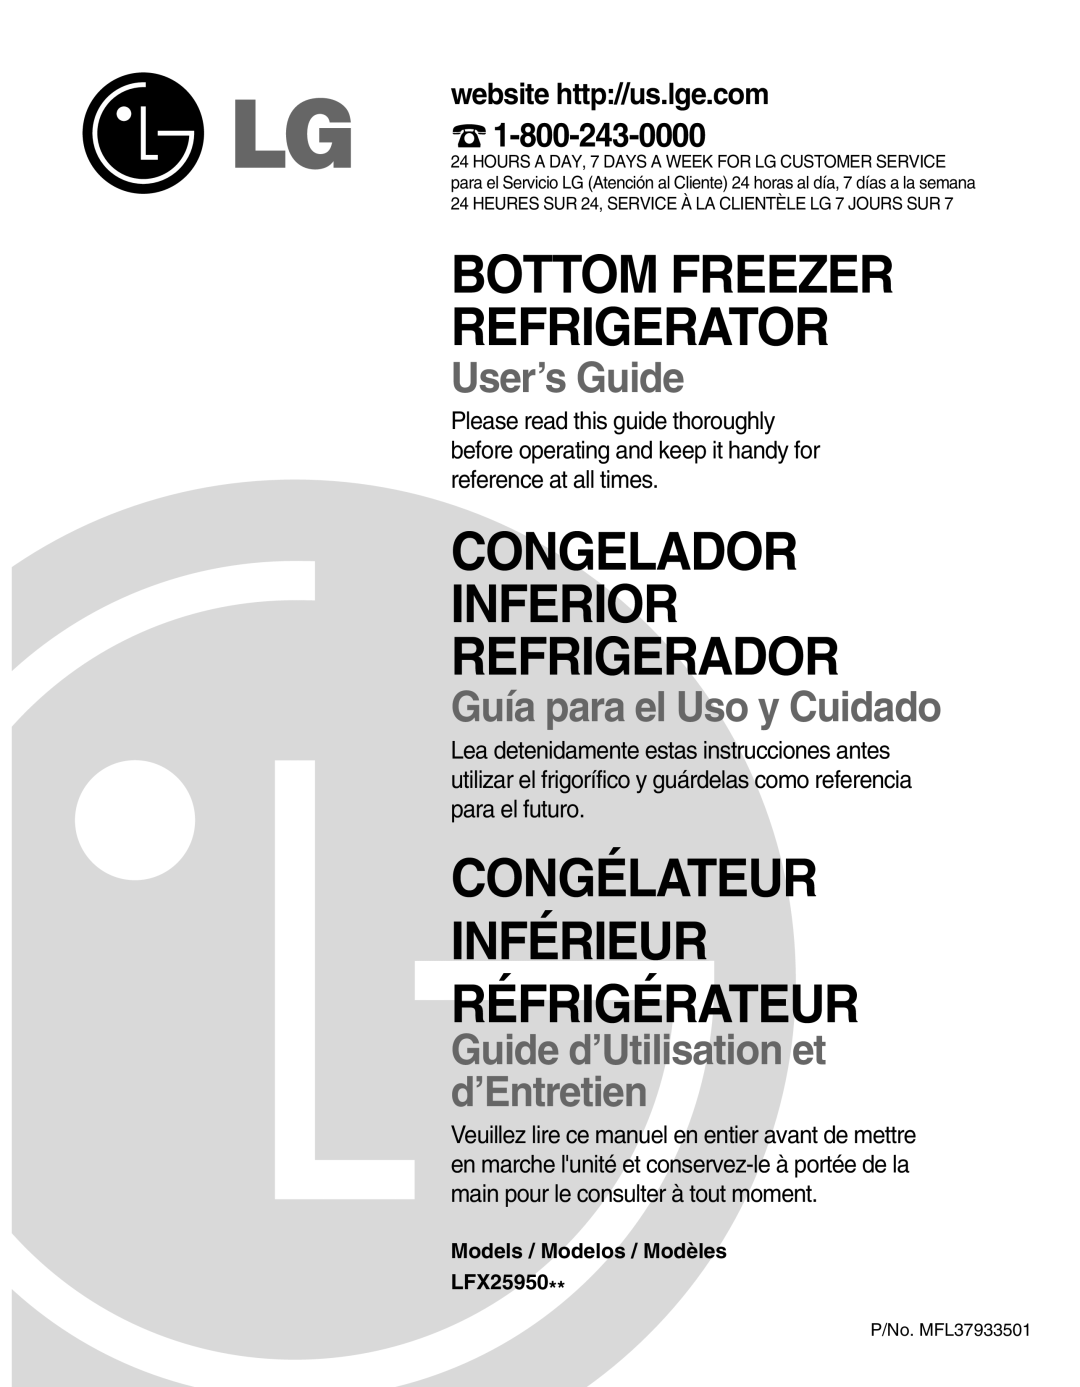 LG Electronics LFX25950 manual Congelador Inferior Refrigerador, Congélateur Inférieur Réfrigérateur, User’s Guide 